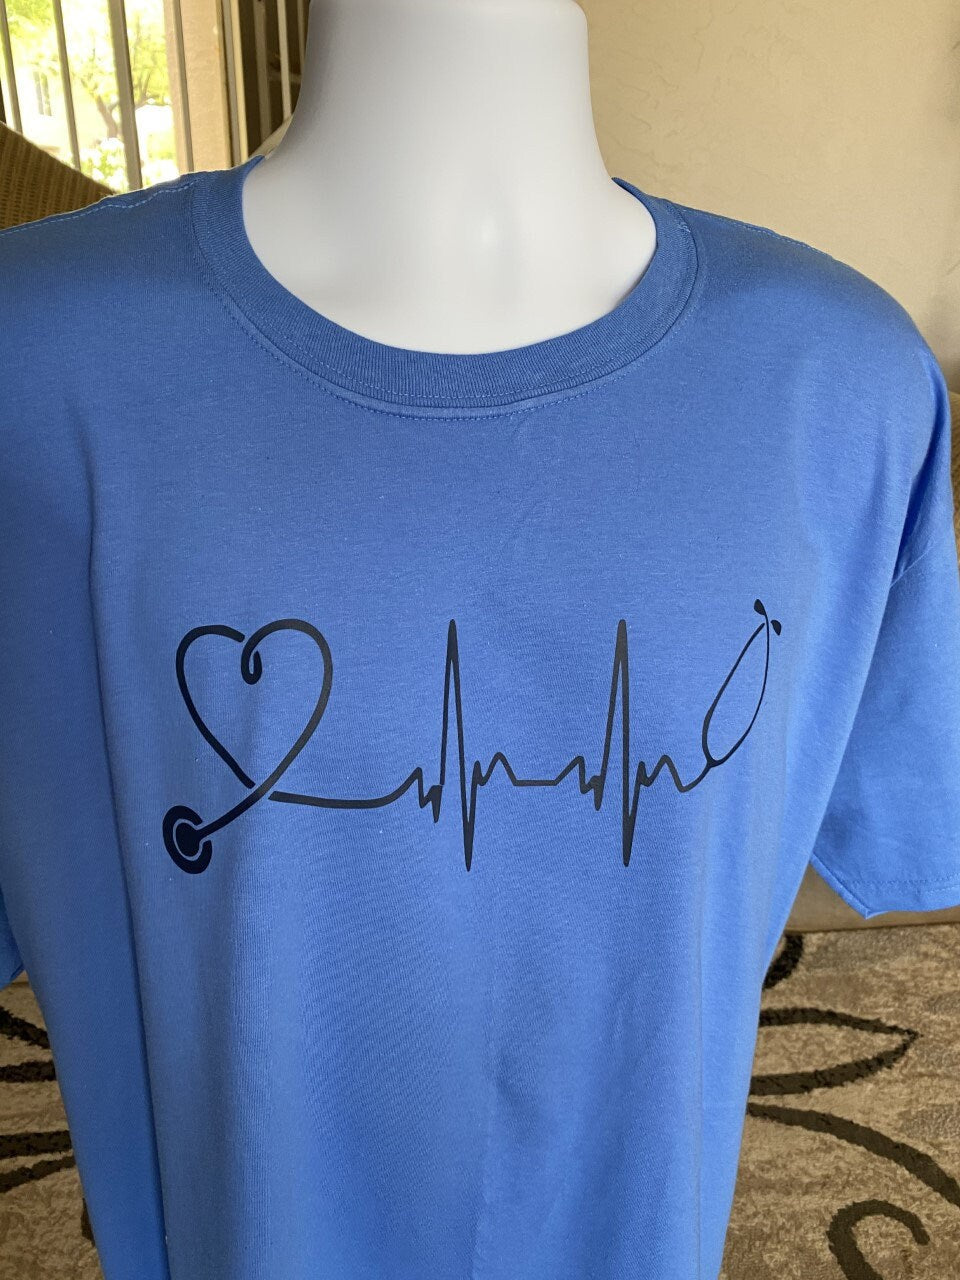 Nurse Stethoscope Heartbeat T-shirt tank top hoodie crew neck sweatshirt most popular gift present best seller best selling custom personal